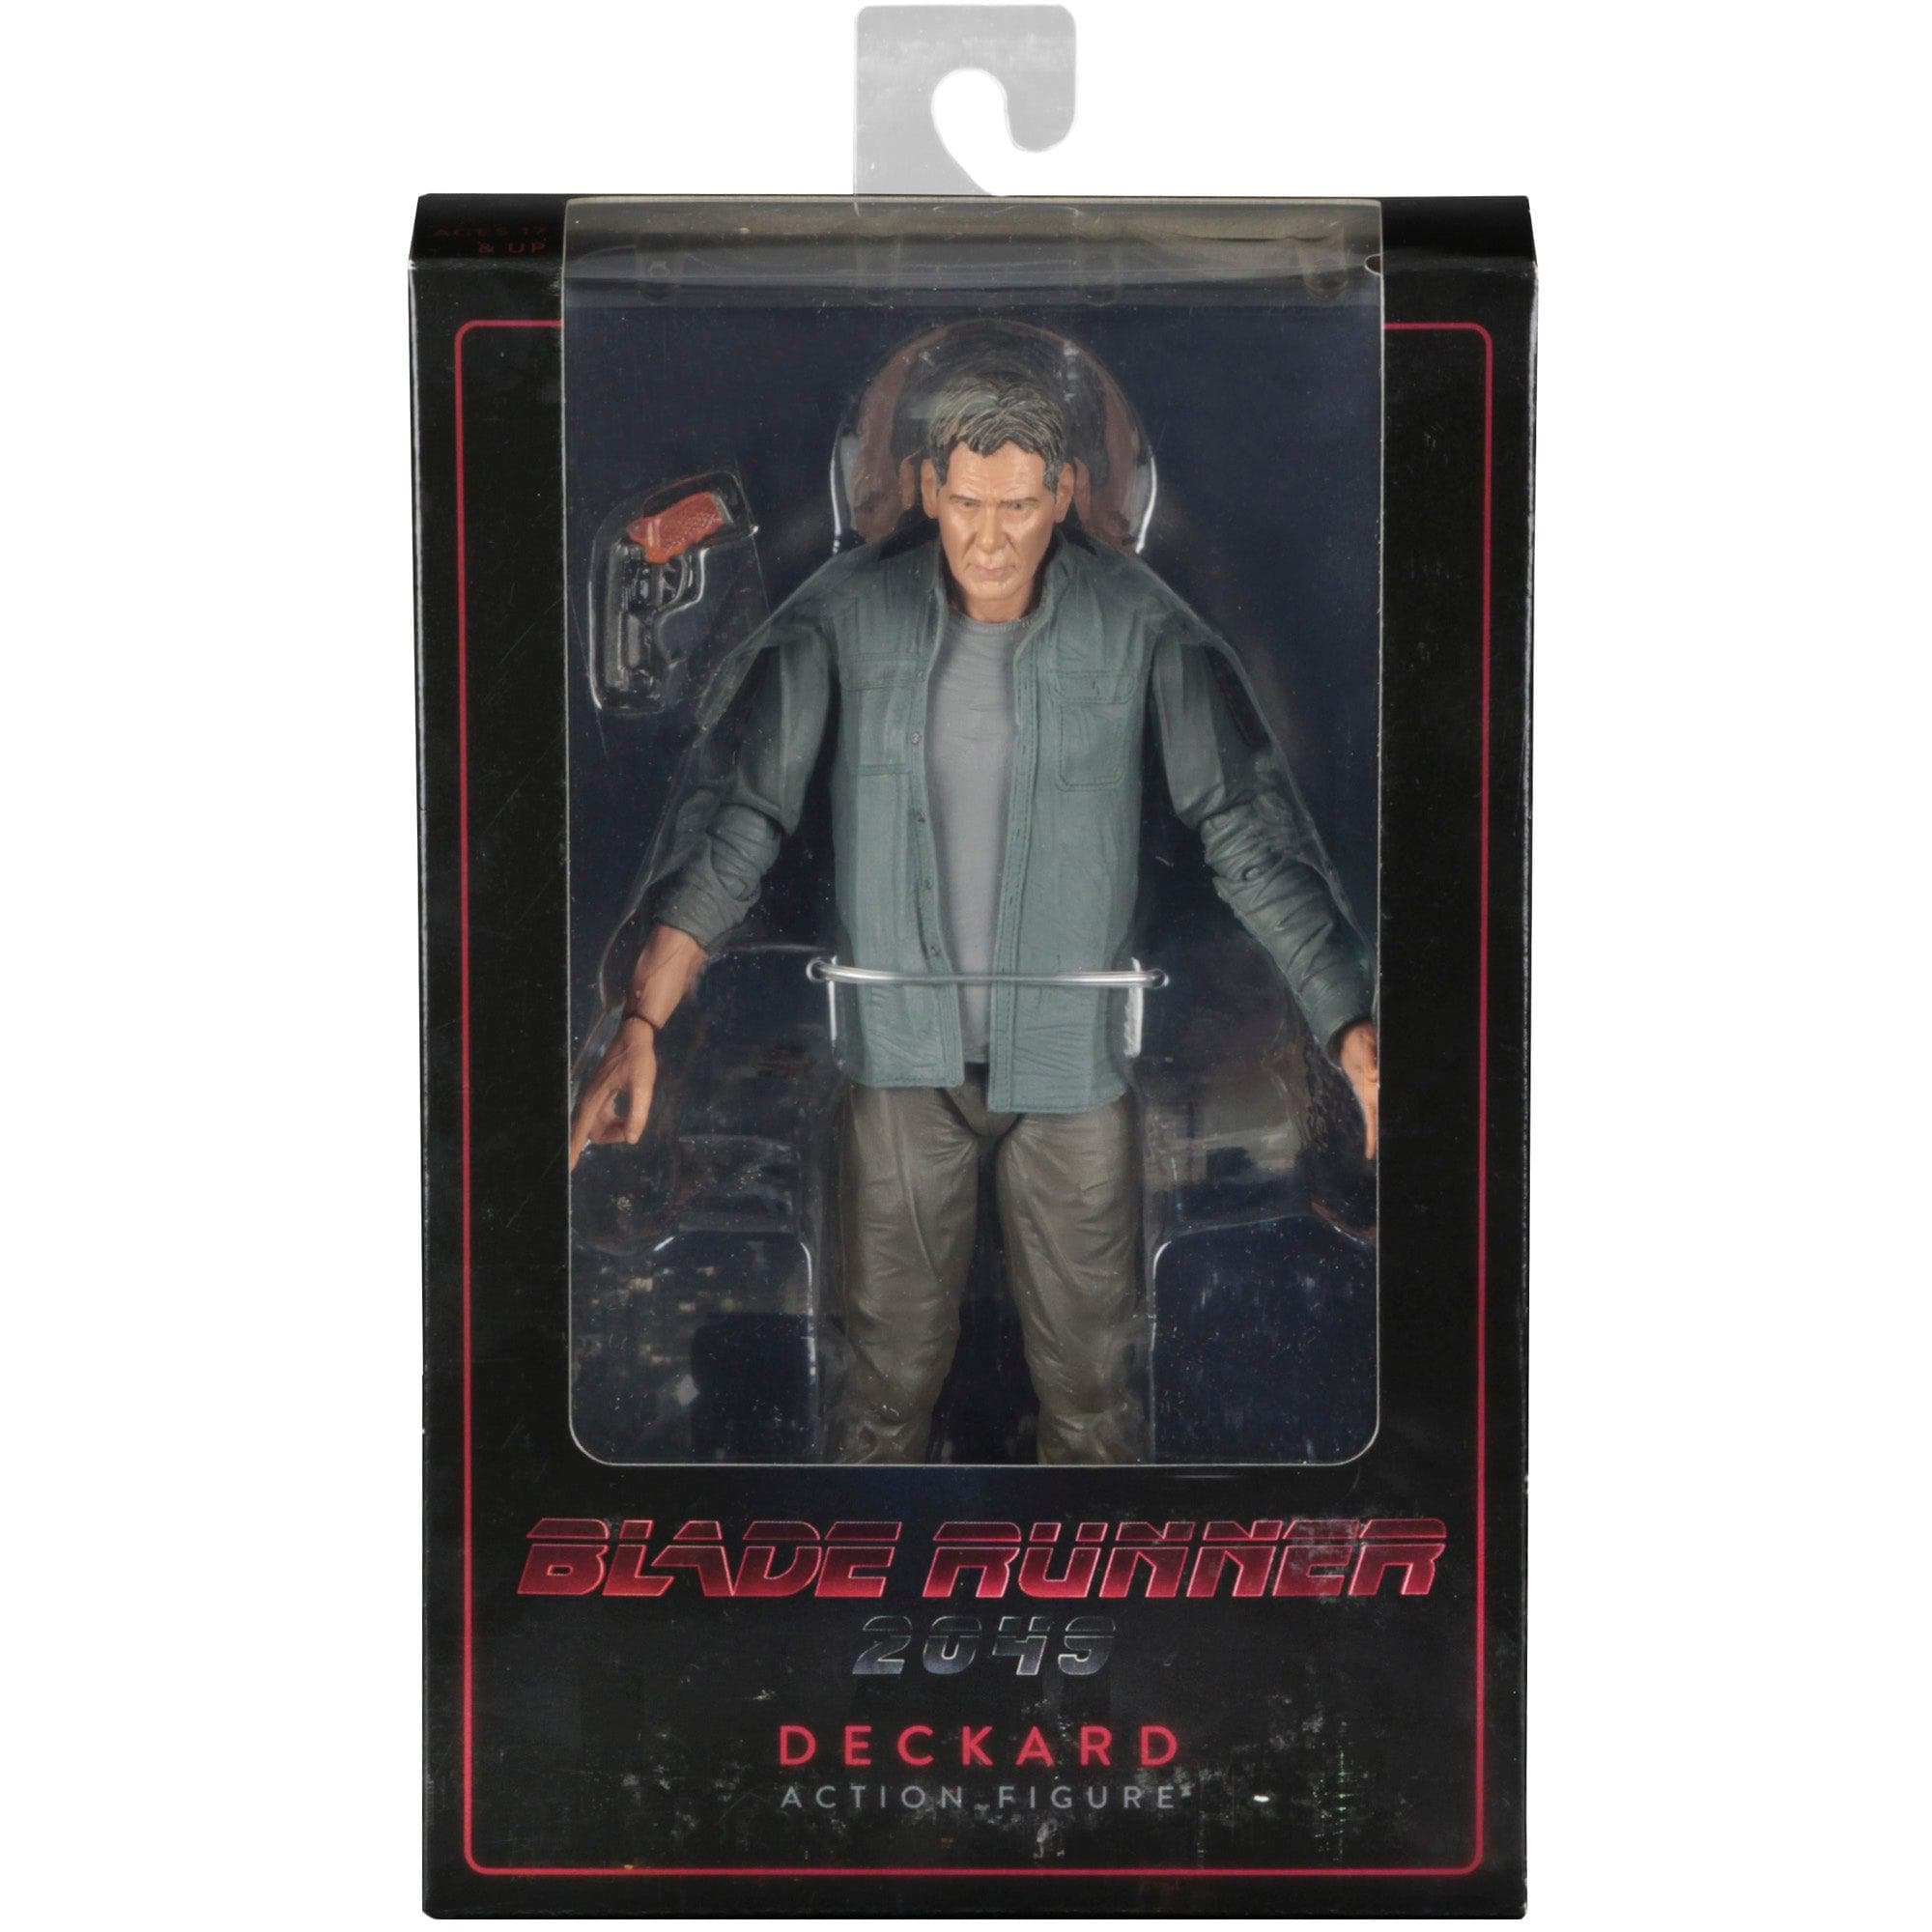 NECA - Blade Runner 2049 - 7" Scale Figure Series 1 Deckard - costumes.com